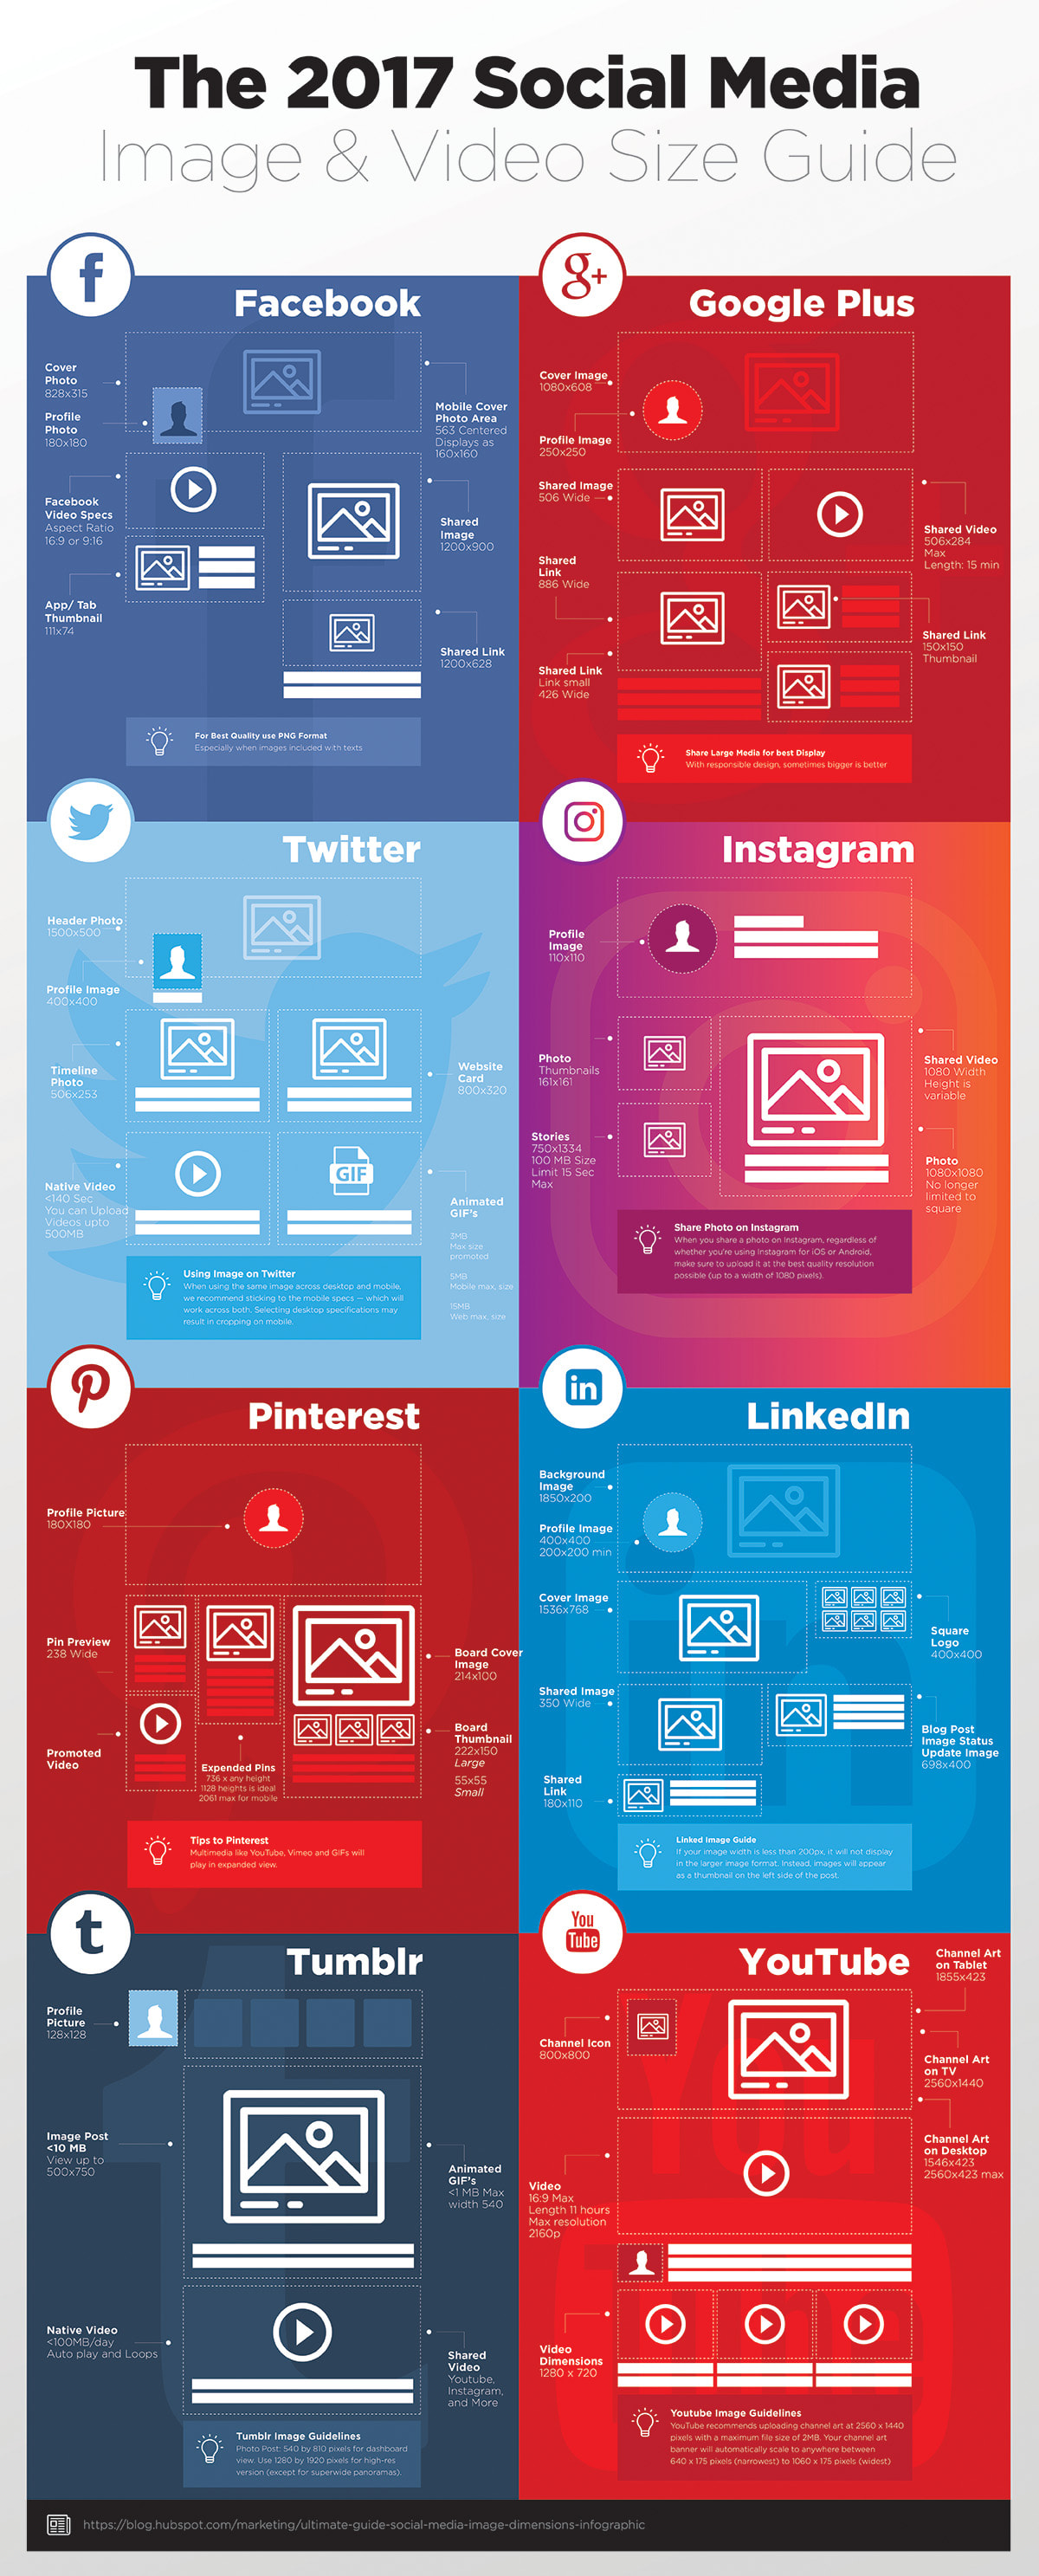 2017 Social Media Image & Video Size Guide